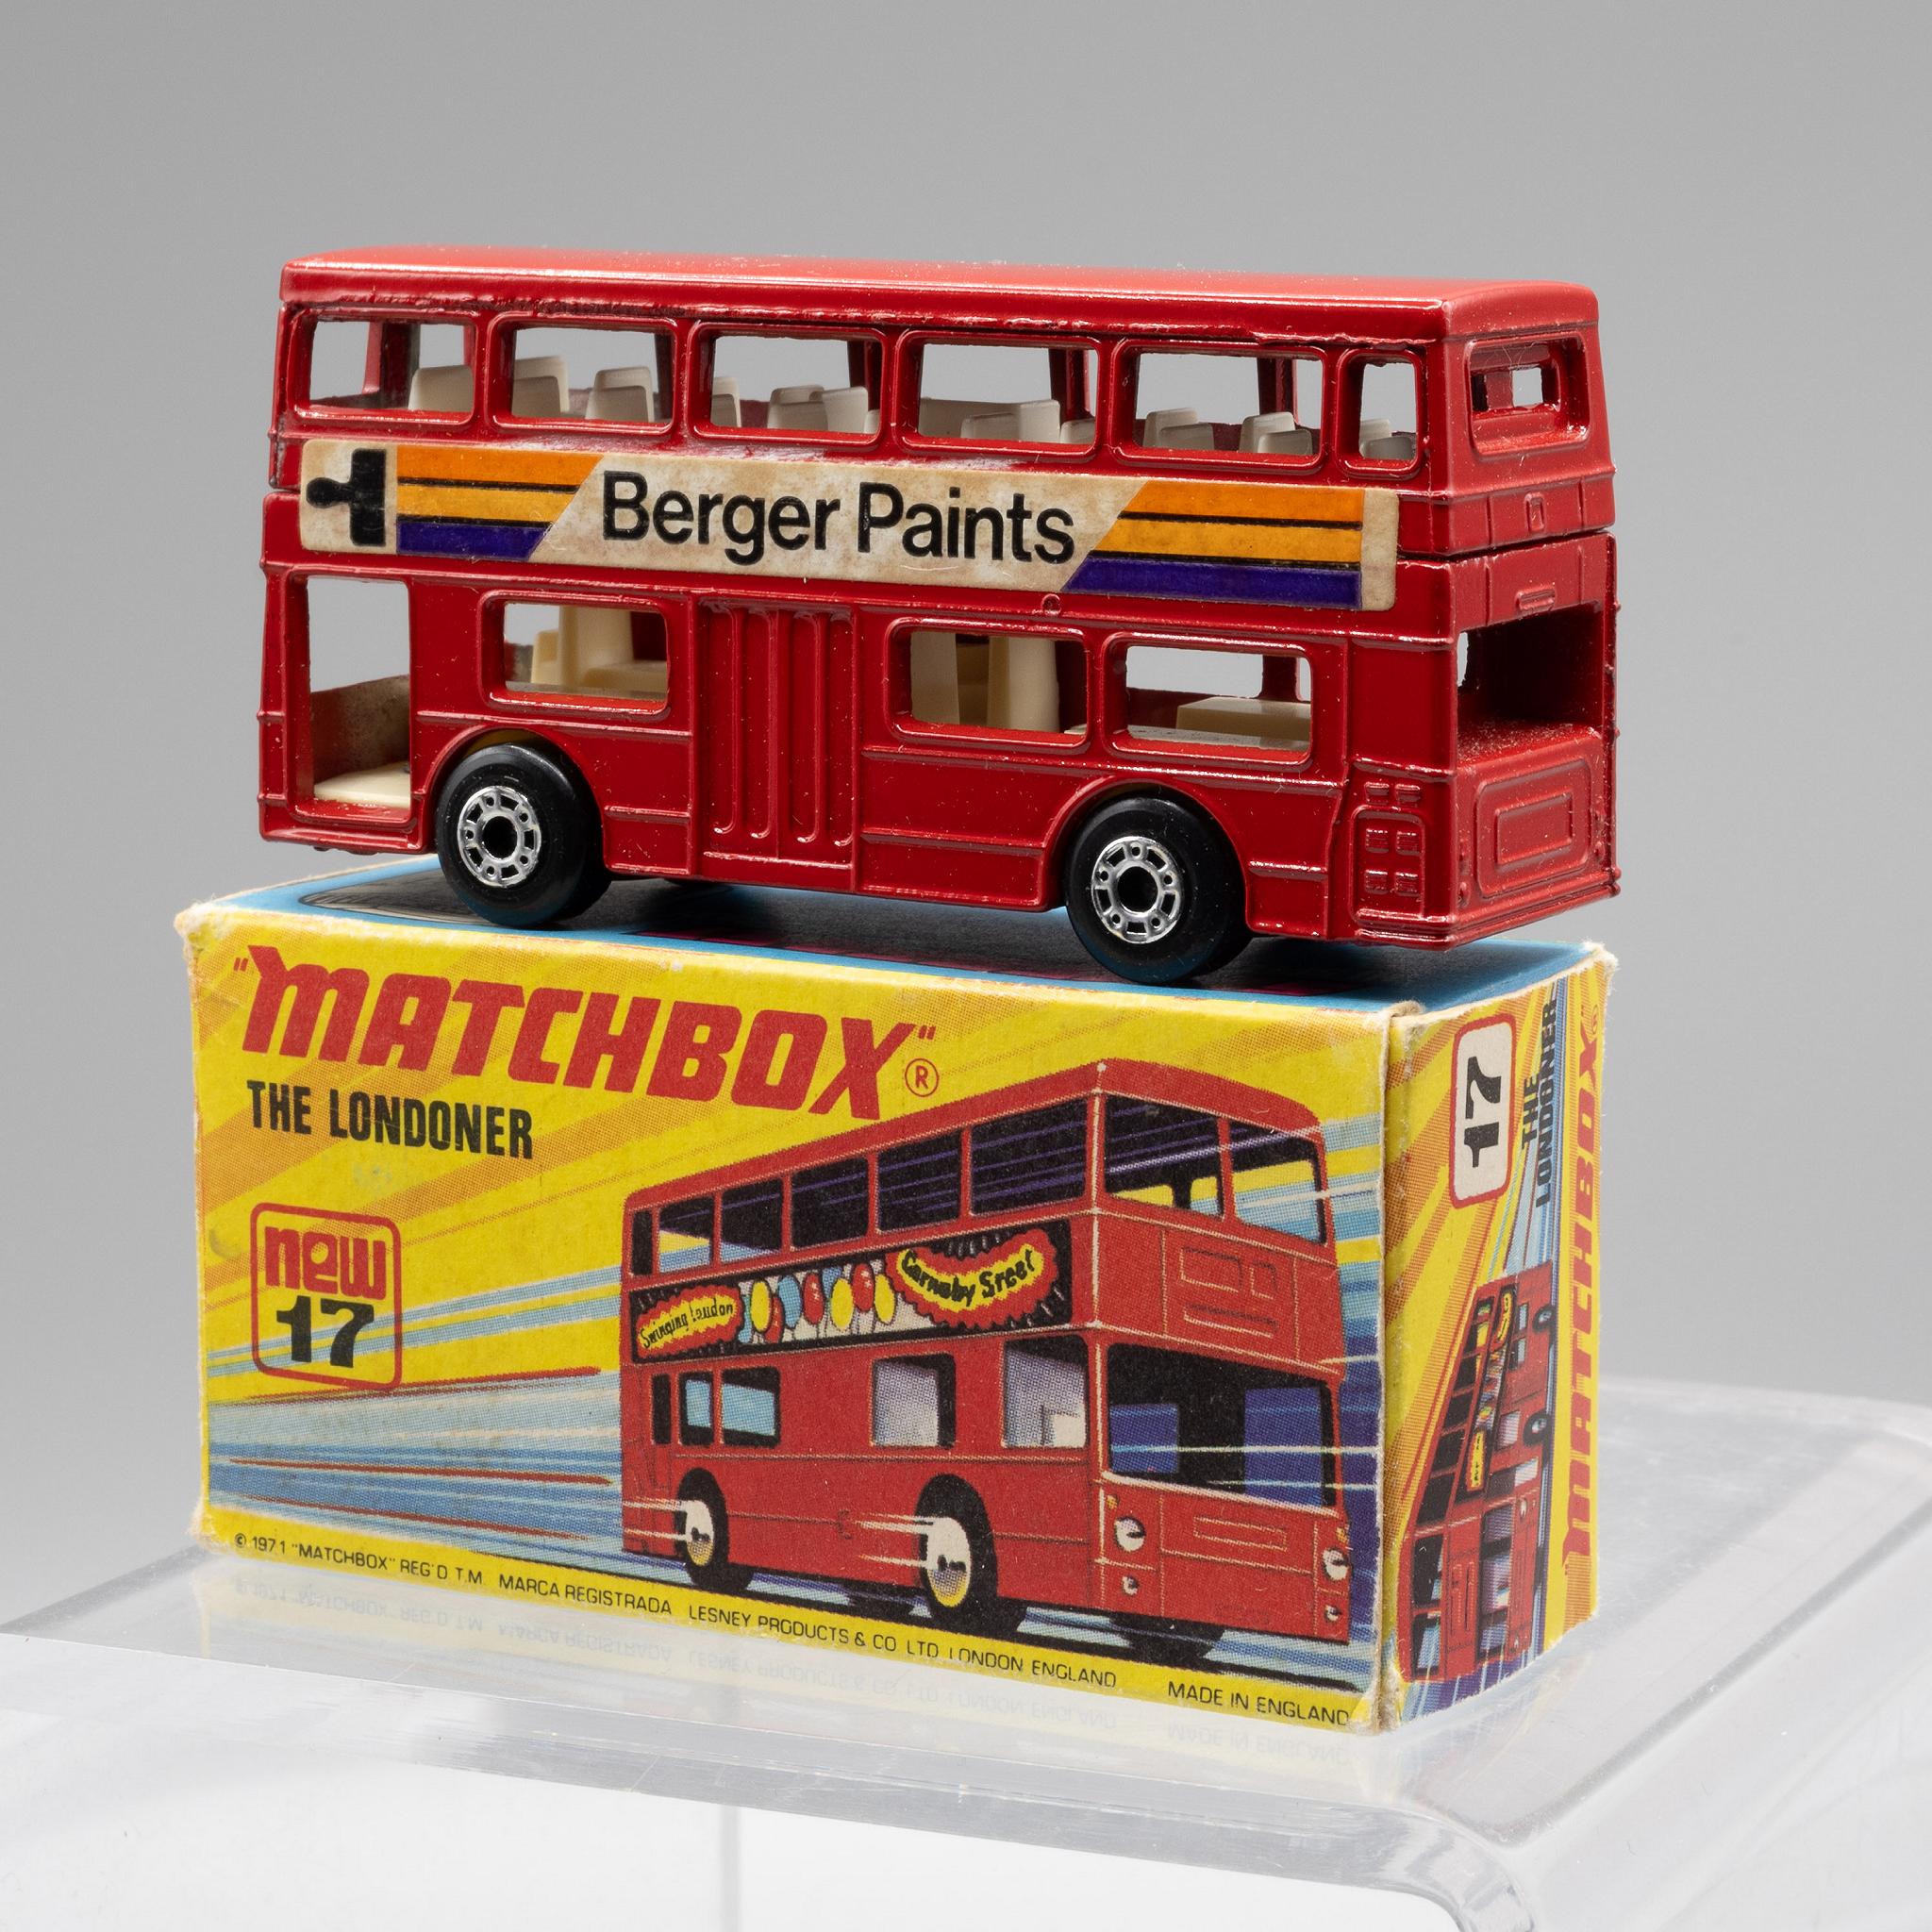 Matchbox+Superfast+The+Londoner+bus+Berger+Paints picture 3